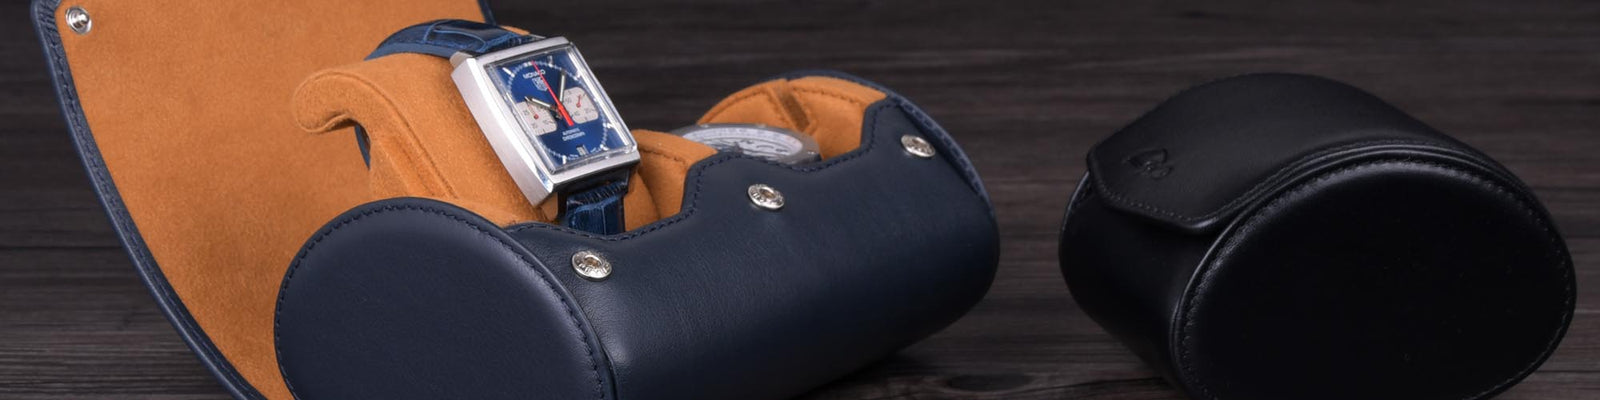 4-Watch Travel & Storage Roll - Blue Epsom Leather - Swiss Design - Carapaz